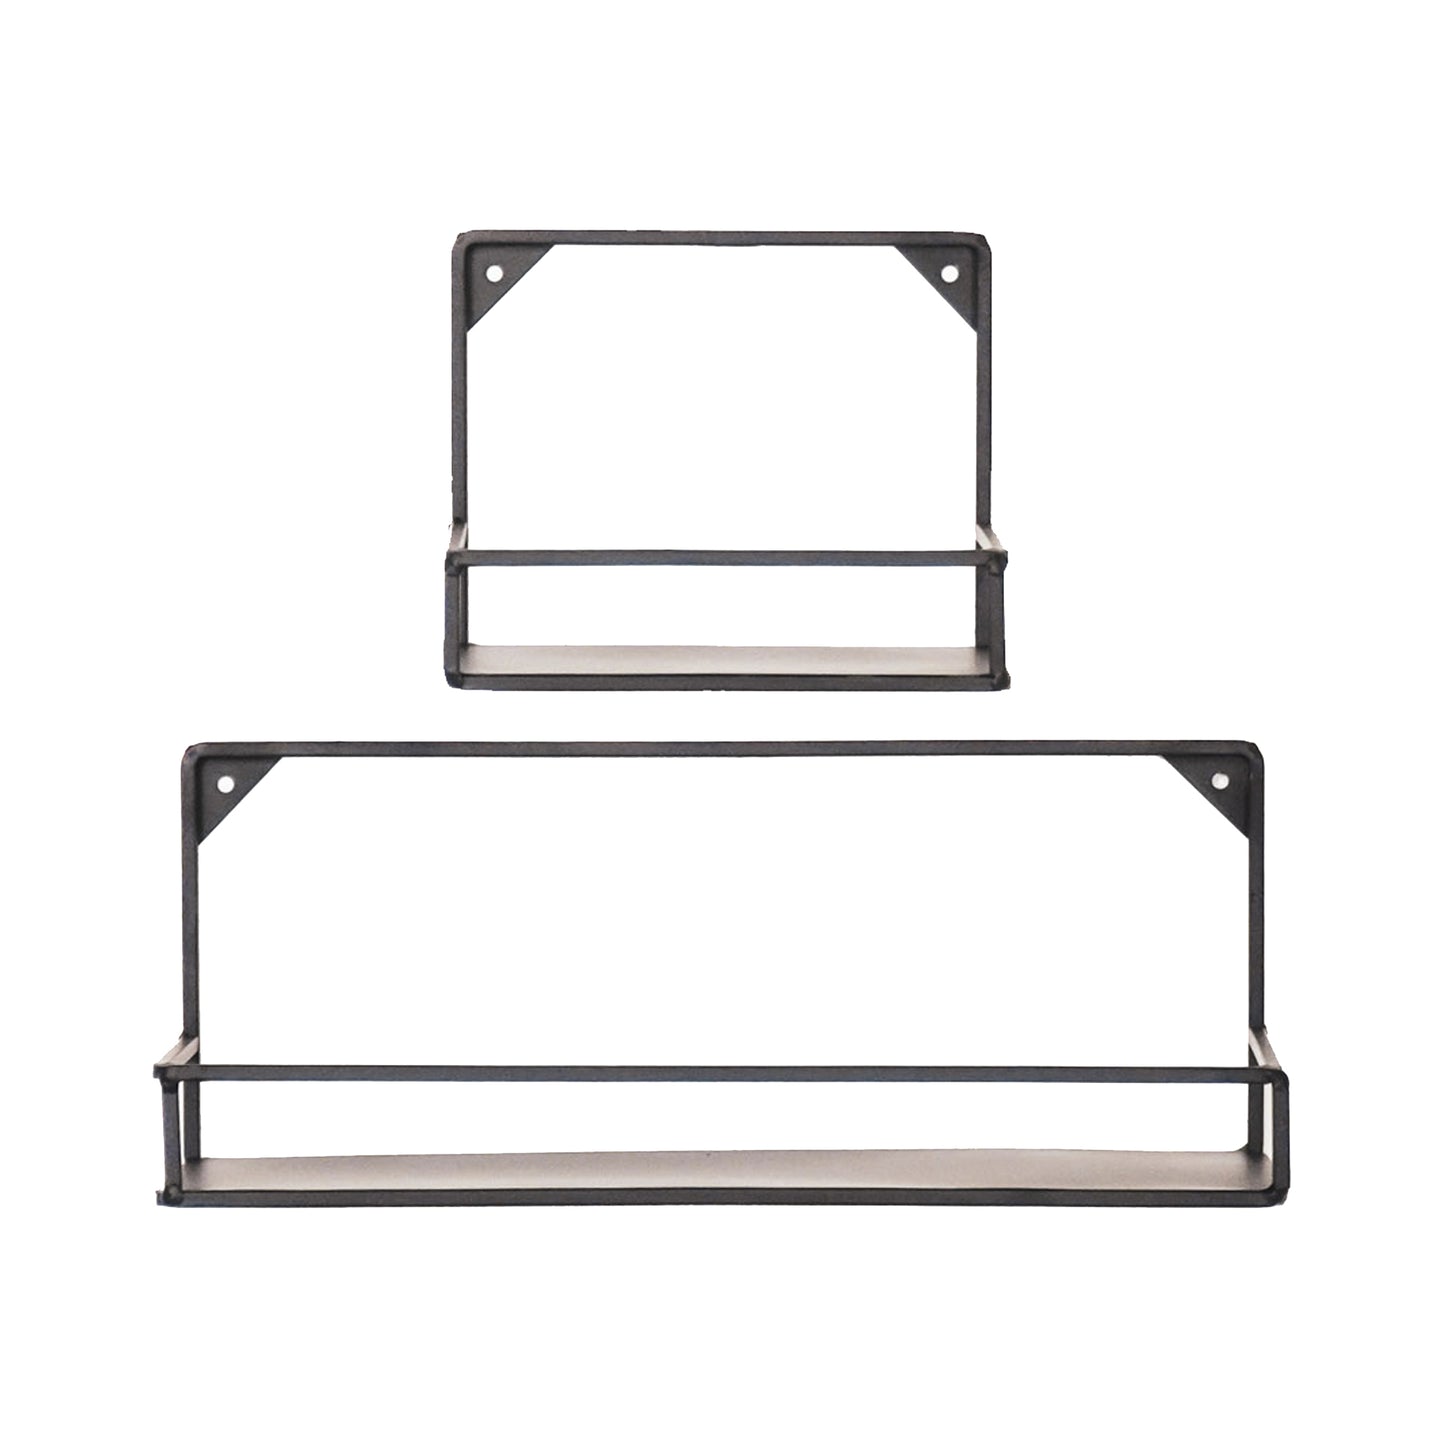 HV Set of 2 Wall Shelves- Black -Metal- 20x16 en 40x16 cm